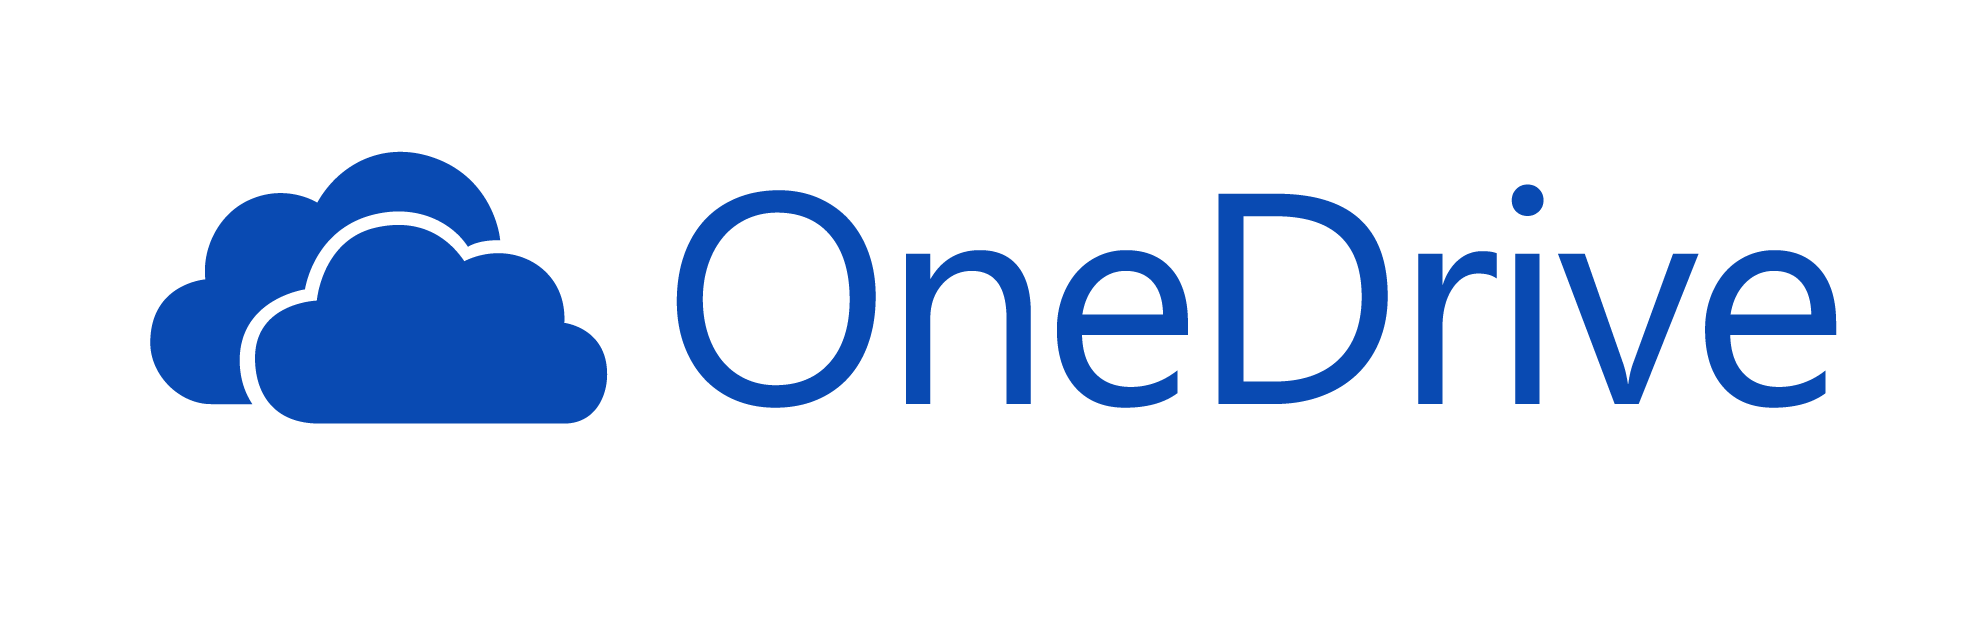 Microsoft OneDrive logo in beeld